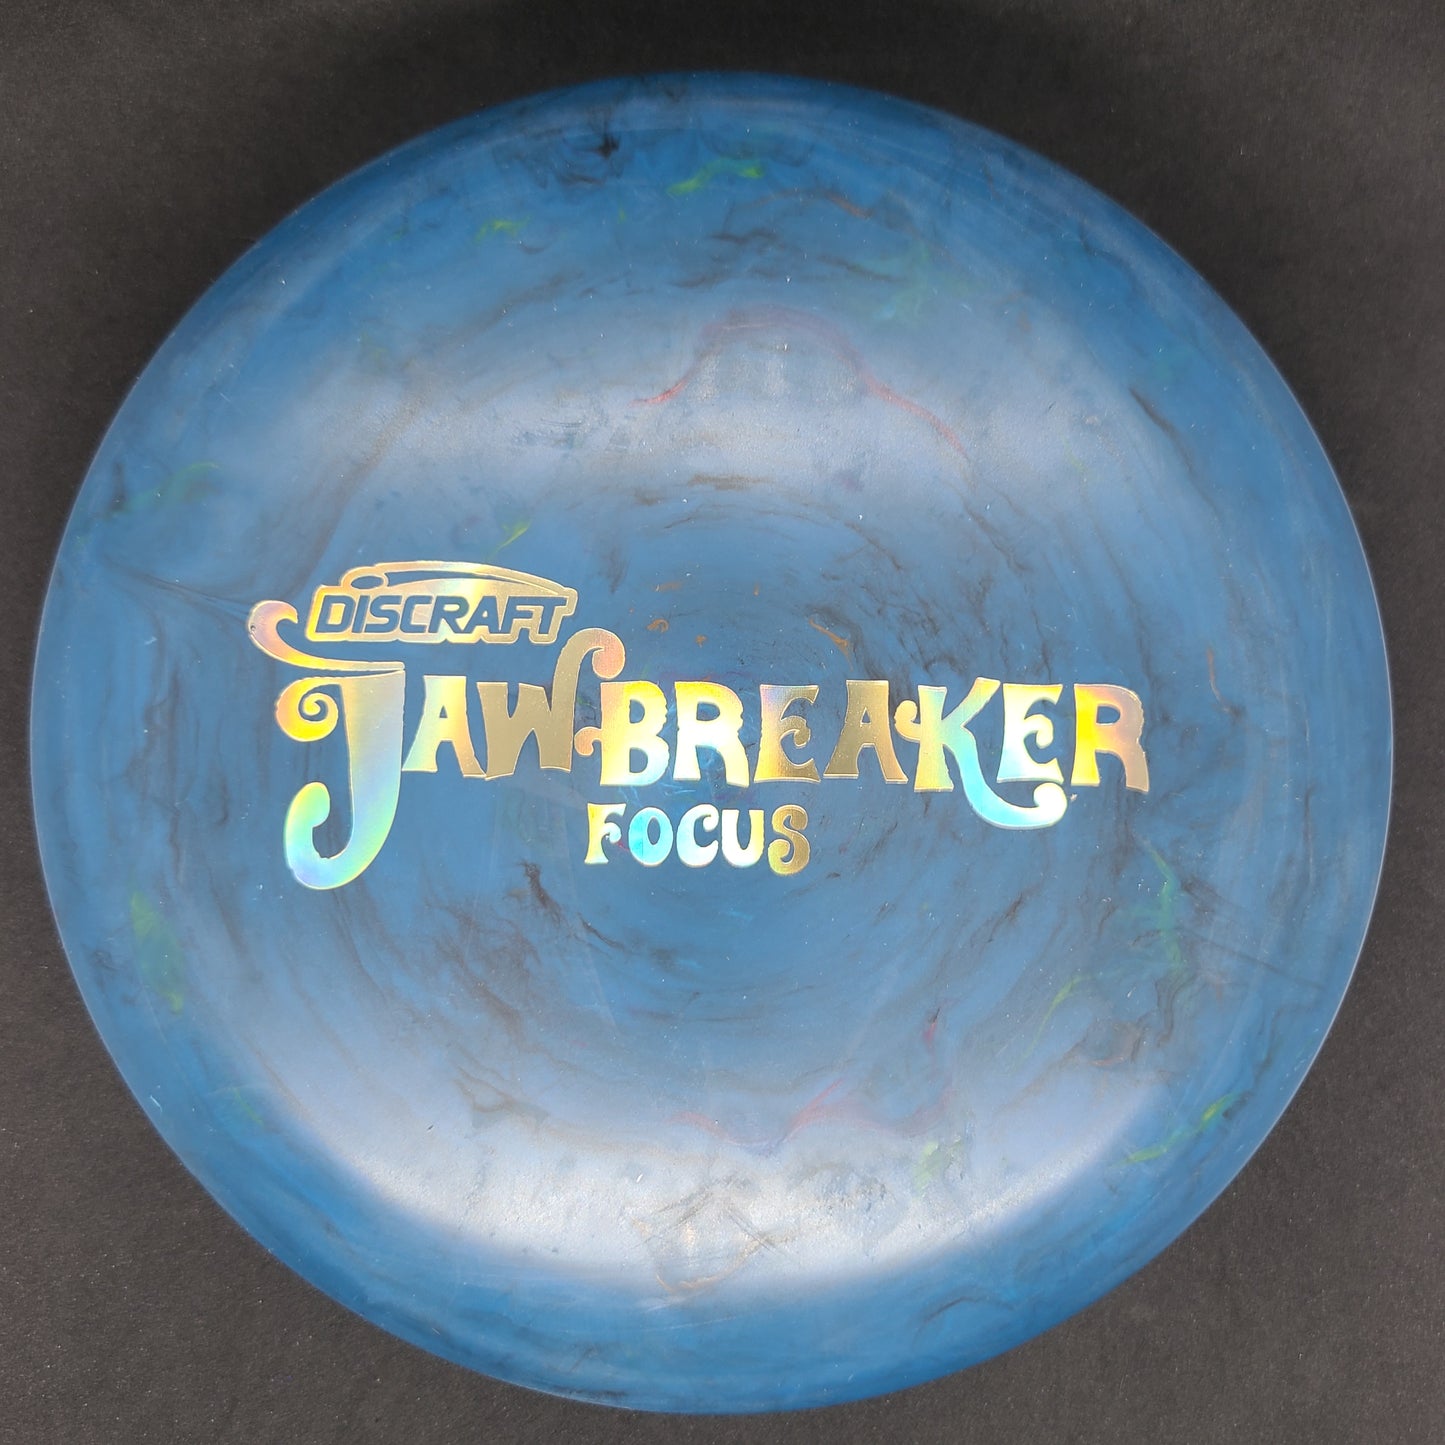 Discraft - Focus - Jawbreaker